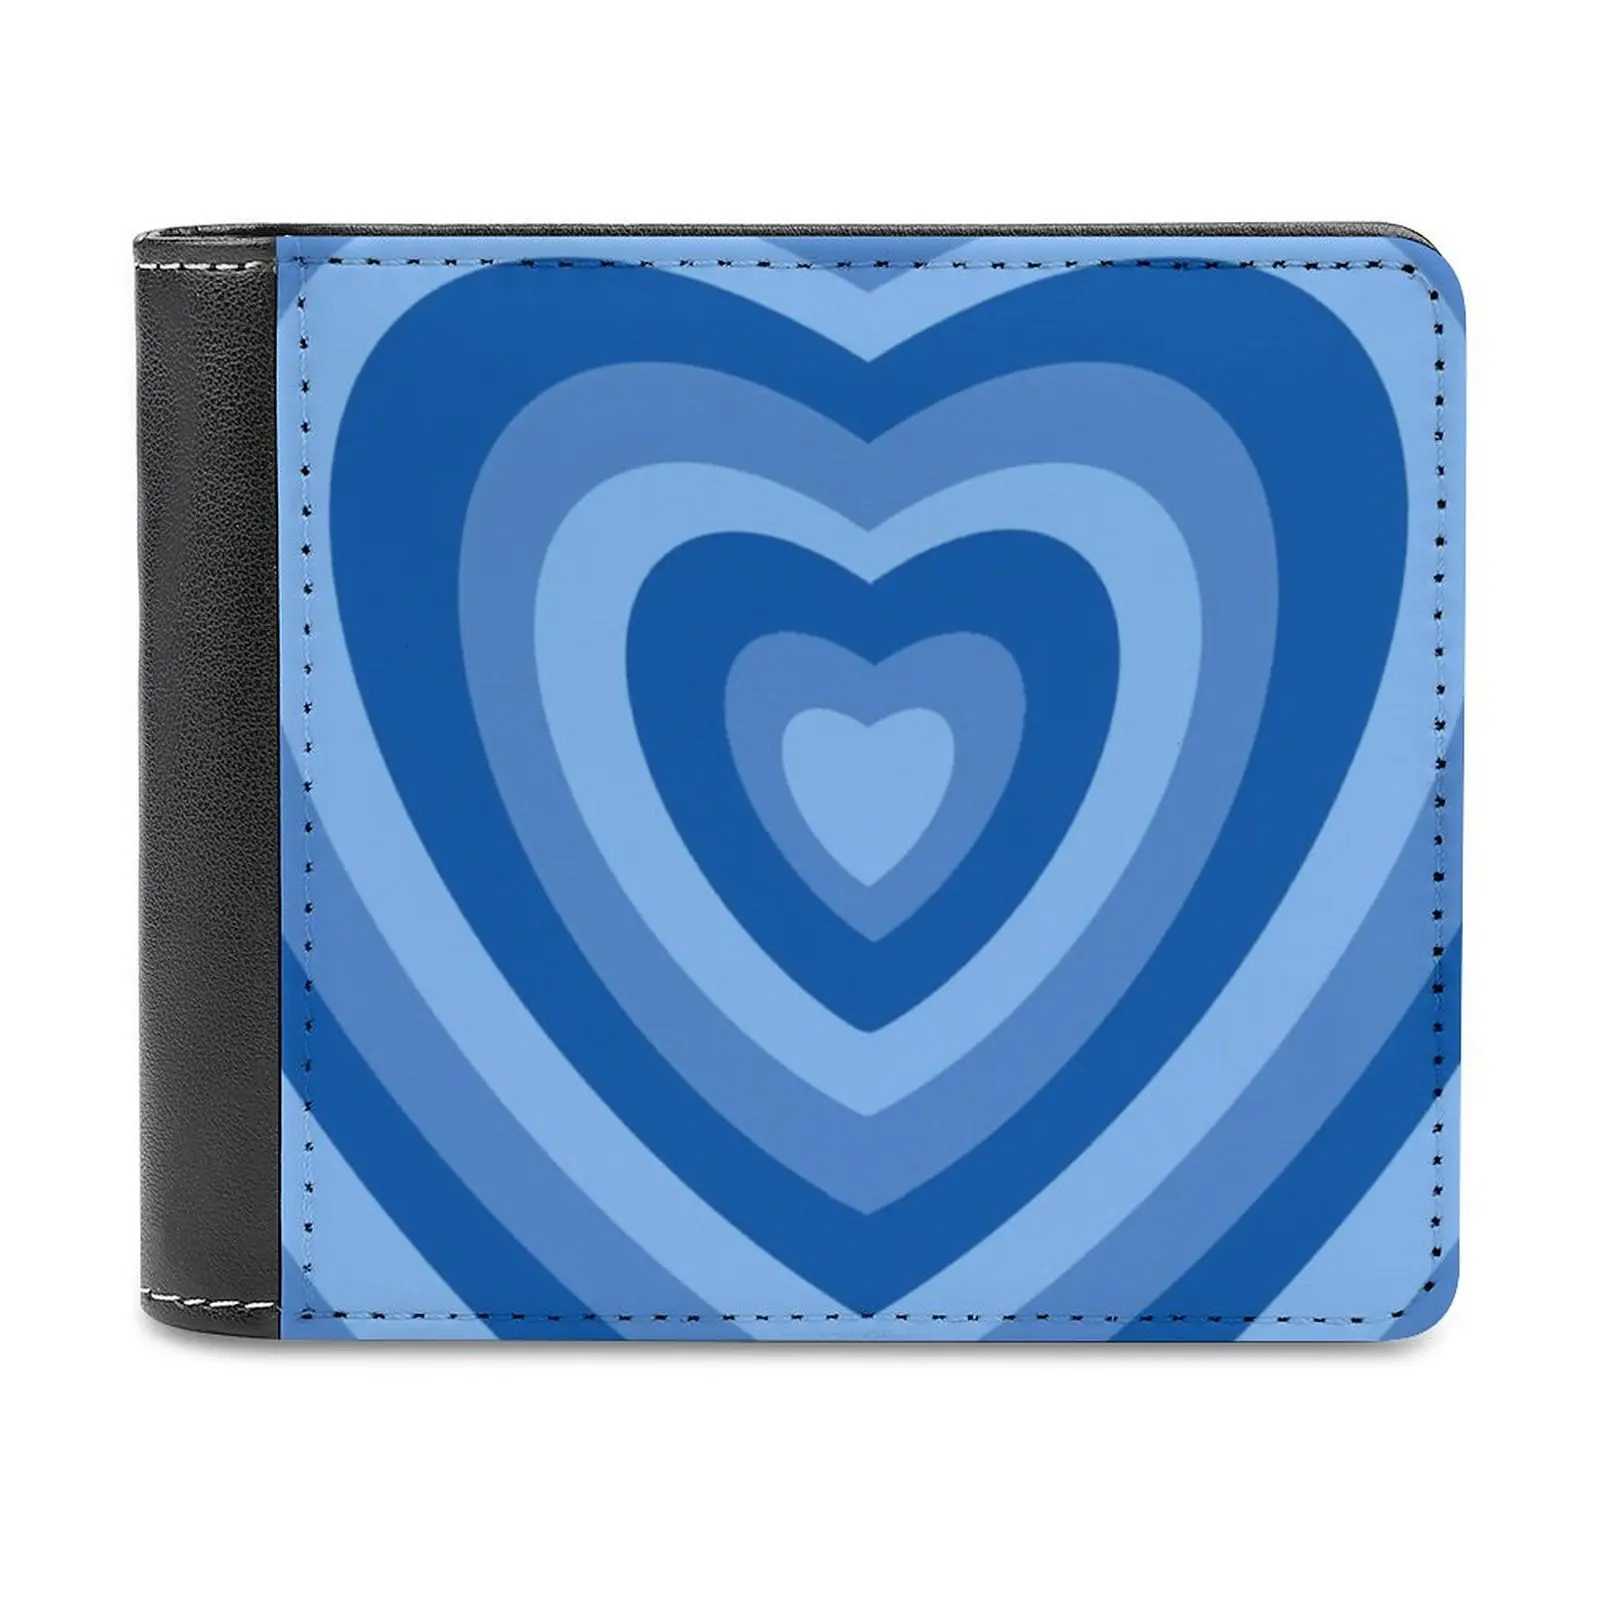 Кожаный кошелек Blue Heart с держателем кредитной карты, Роскошный кошелек Rainbow Rainbow Heart Rainbow Aesthetic, Эстетичный Vsco Groovy